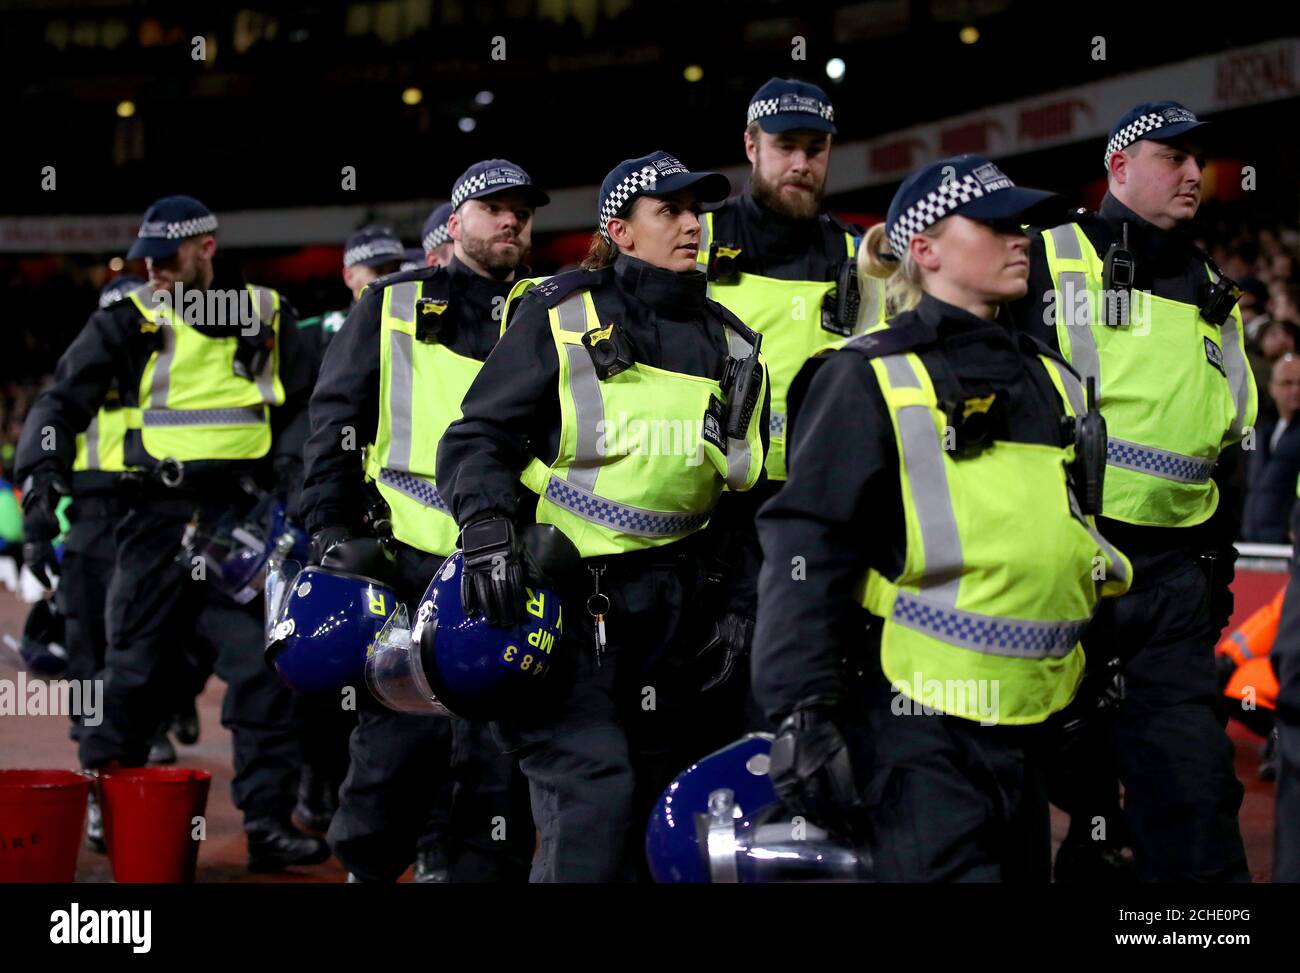 Polizei vor den Tottenham Hotspur-Fans beim Carabao Cup Quarter Final Match im Emirates Stadium, London. Stockfoto